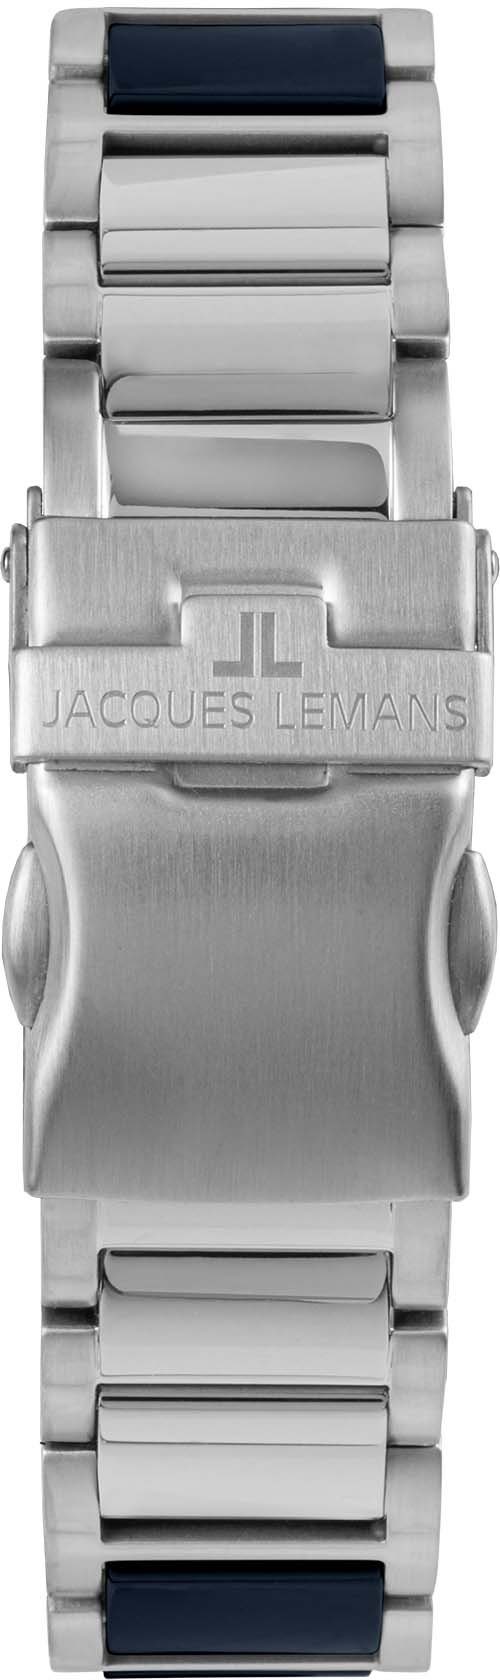 Lemans 42-10B Jacques Liverpool, Keramikuhr